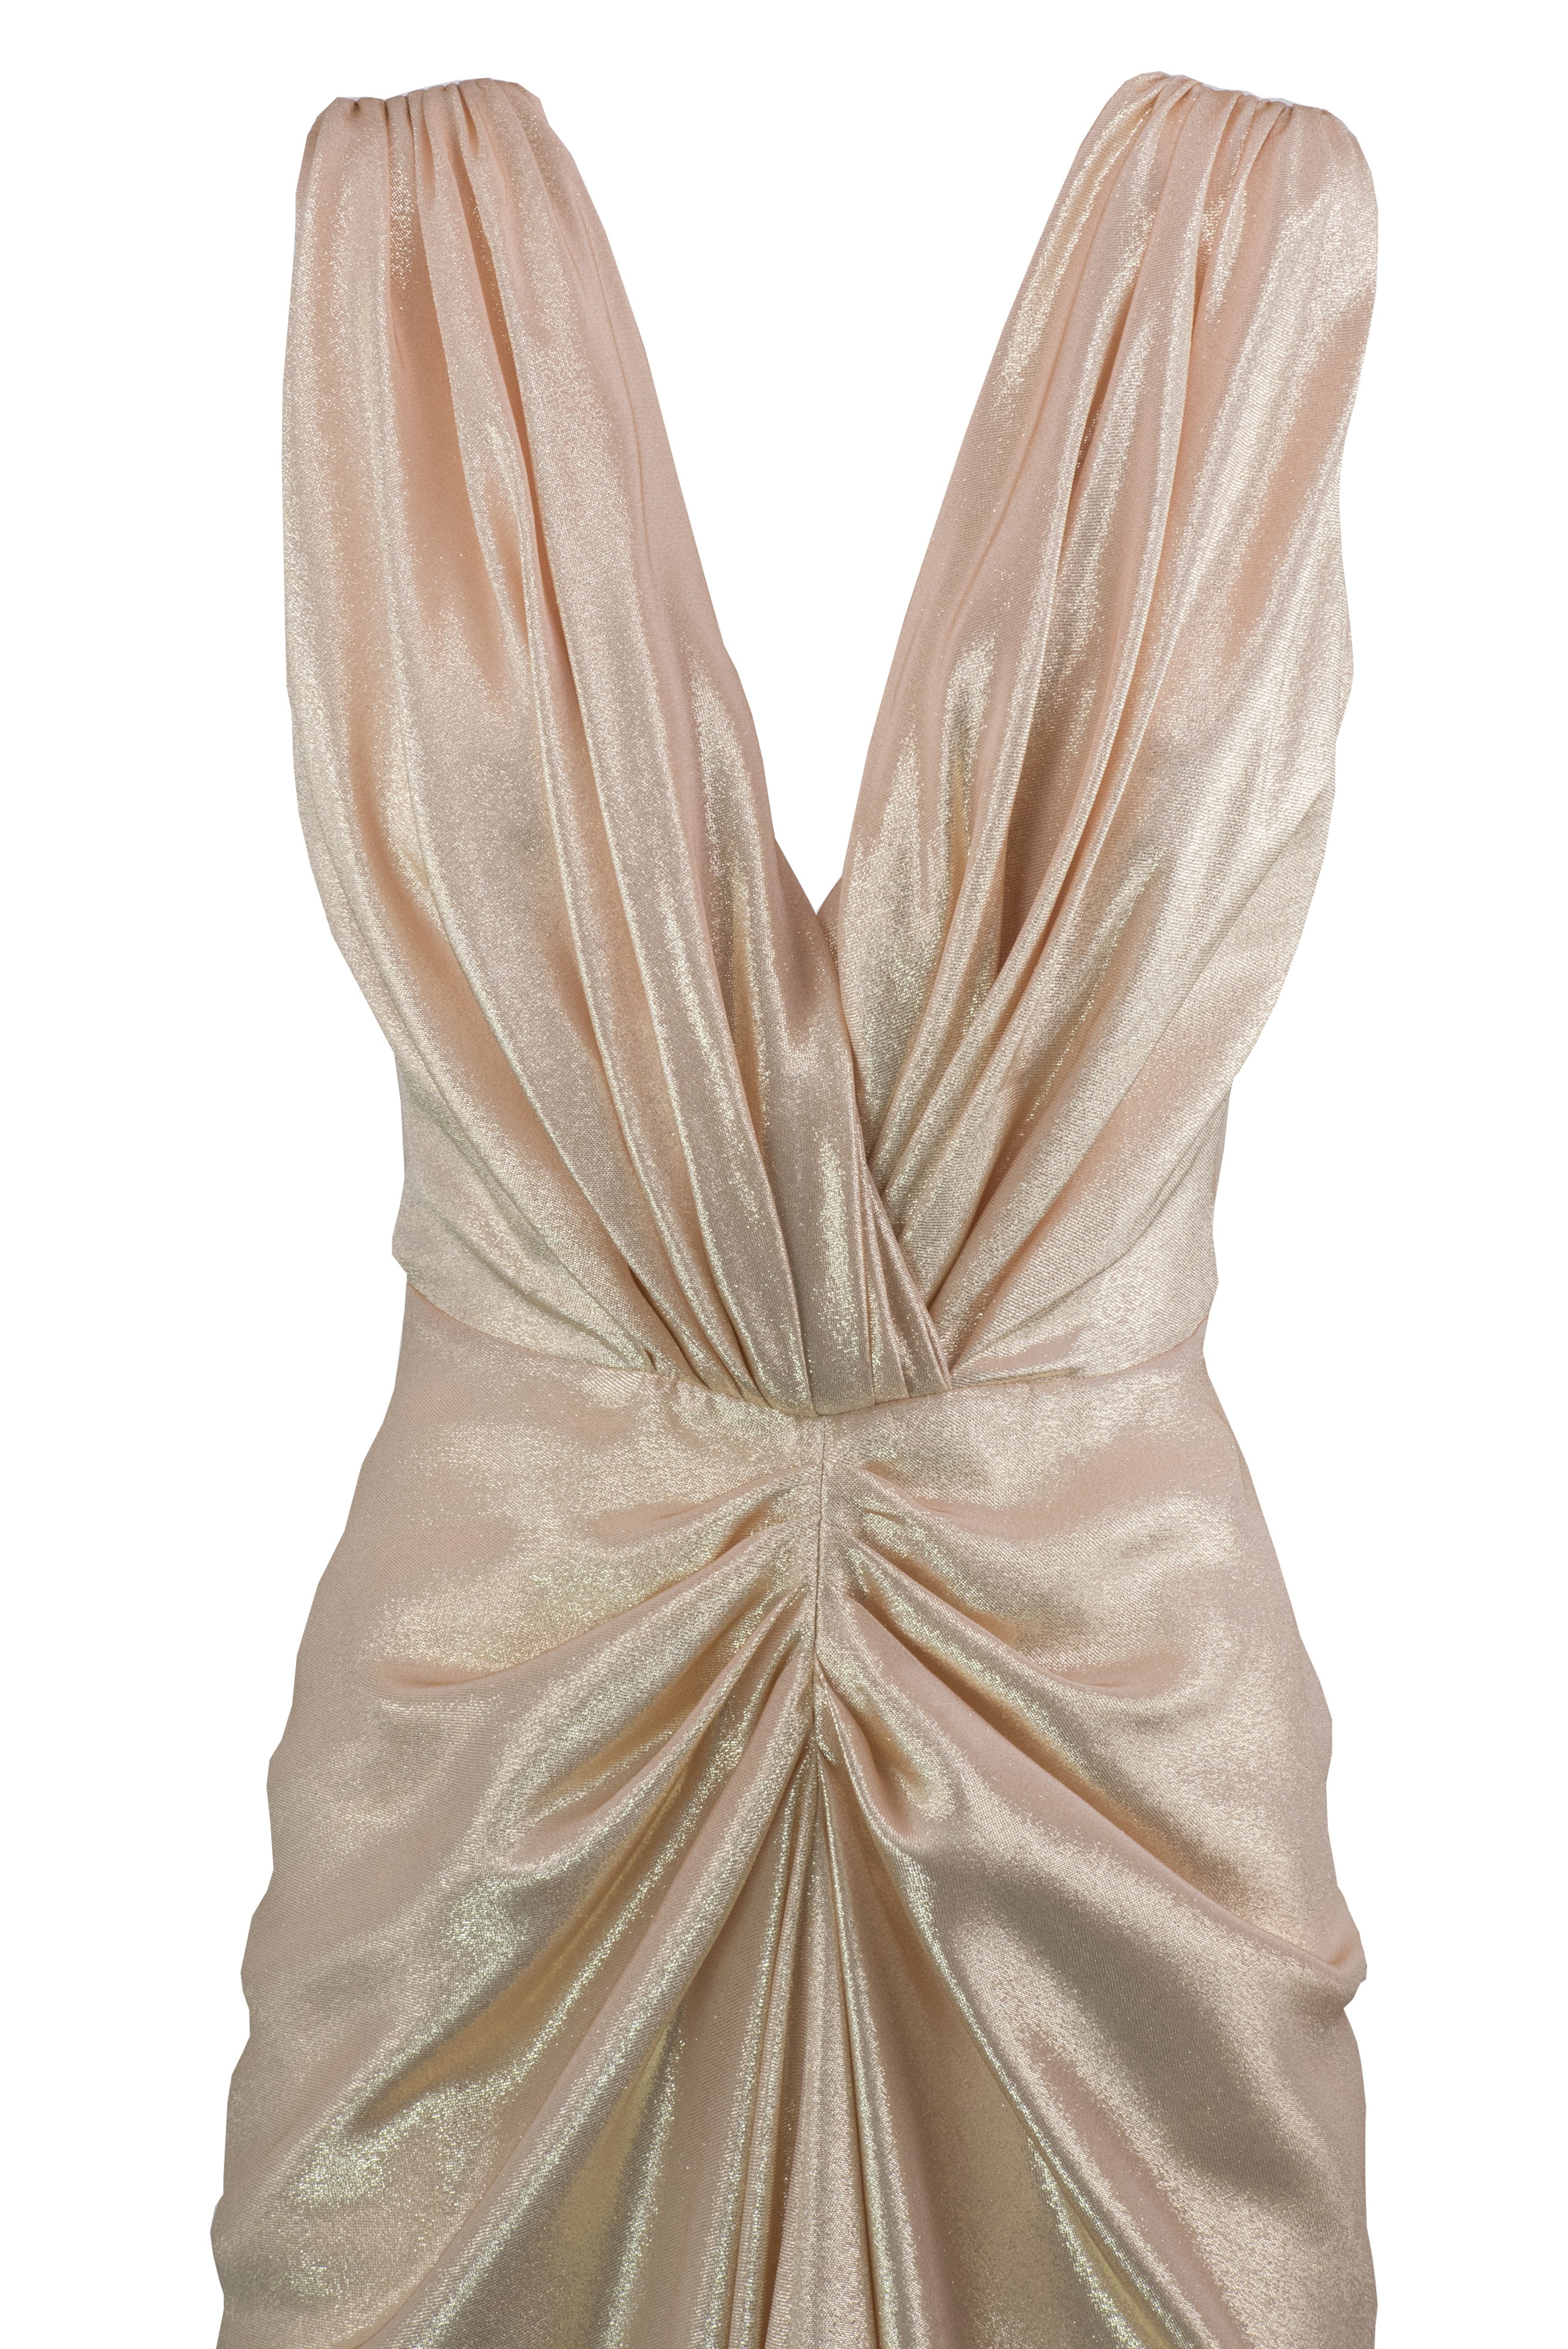 Rhea Costa Dress 20224D LG - New Season Spring Summer 2020